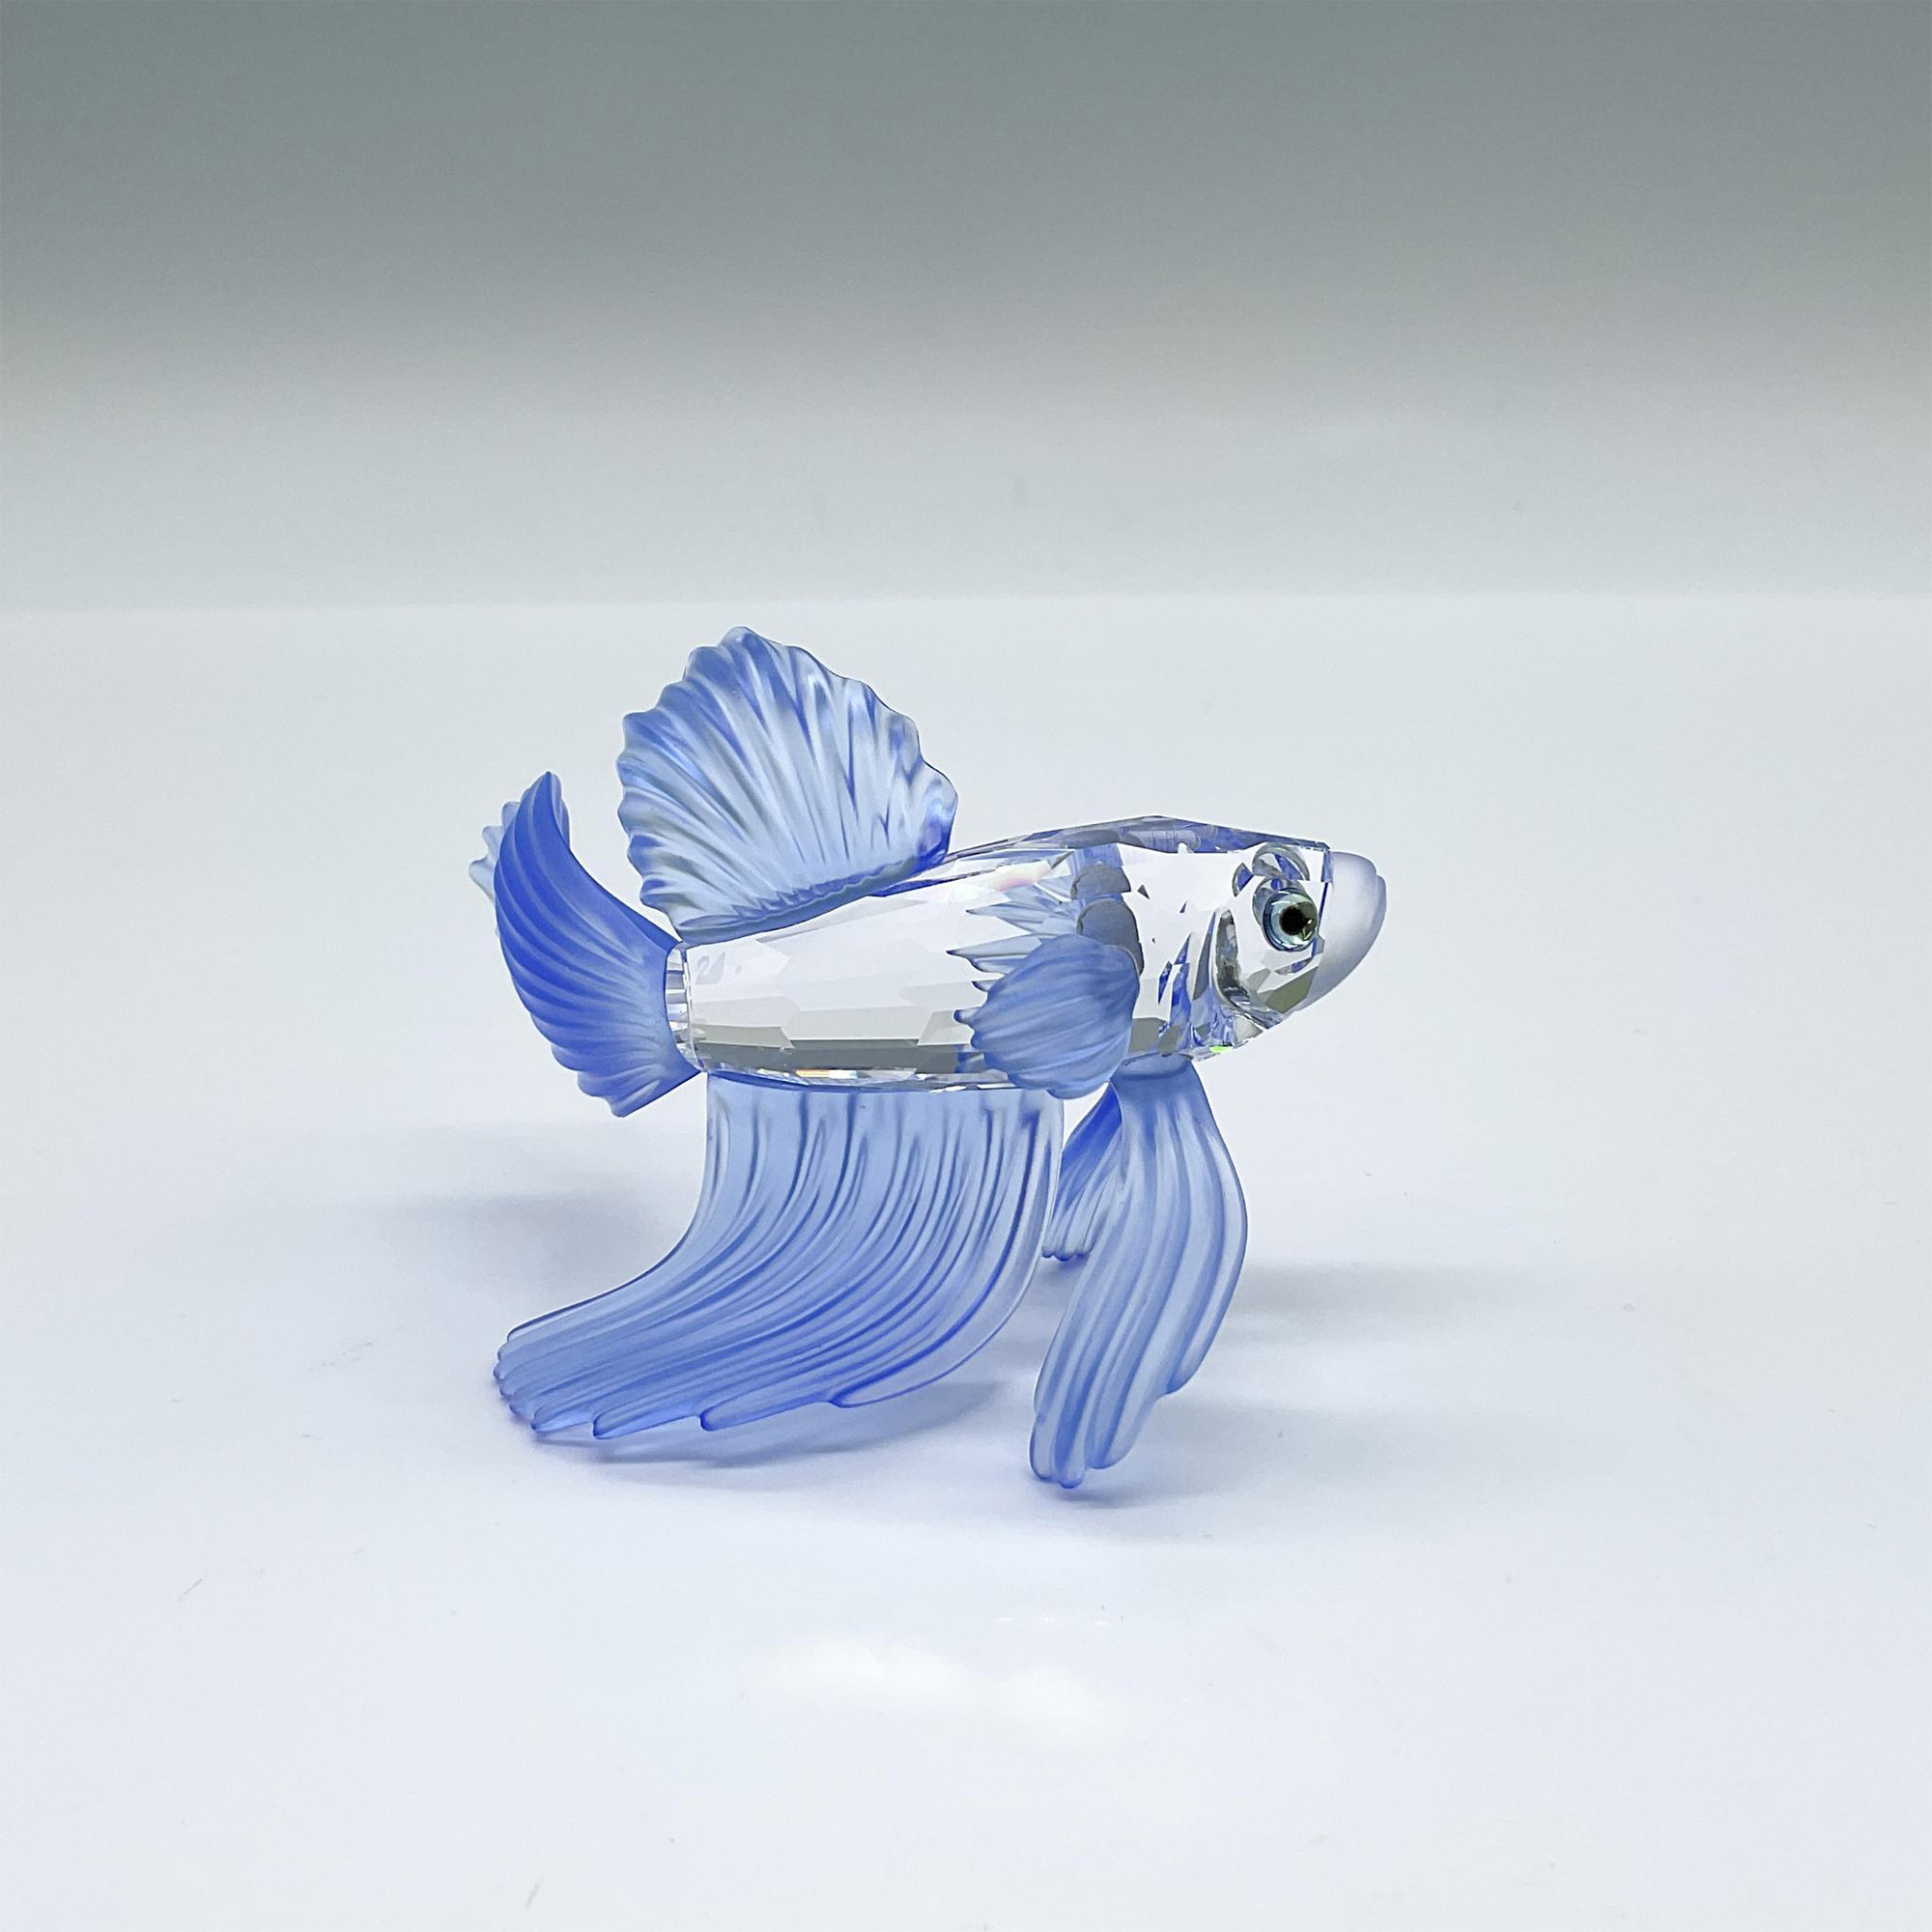 Swarovski Crystal Figurine, Siamese Fighting Fish - Blue - Image 2 of 3